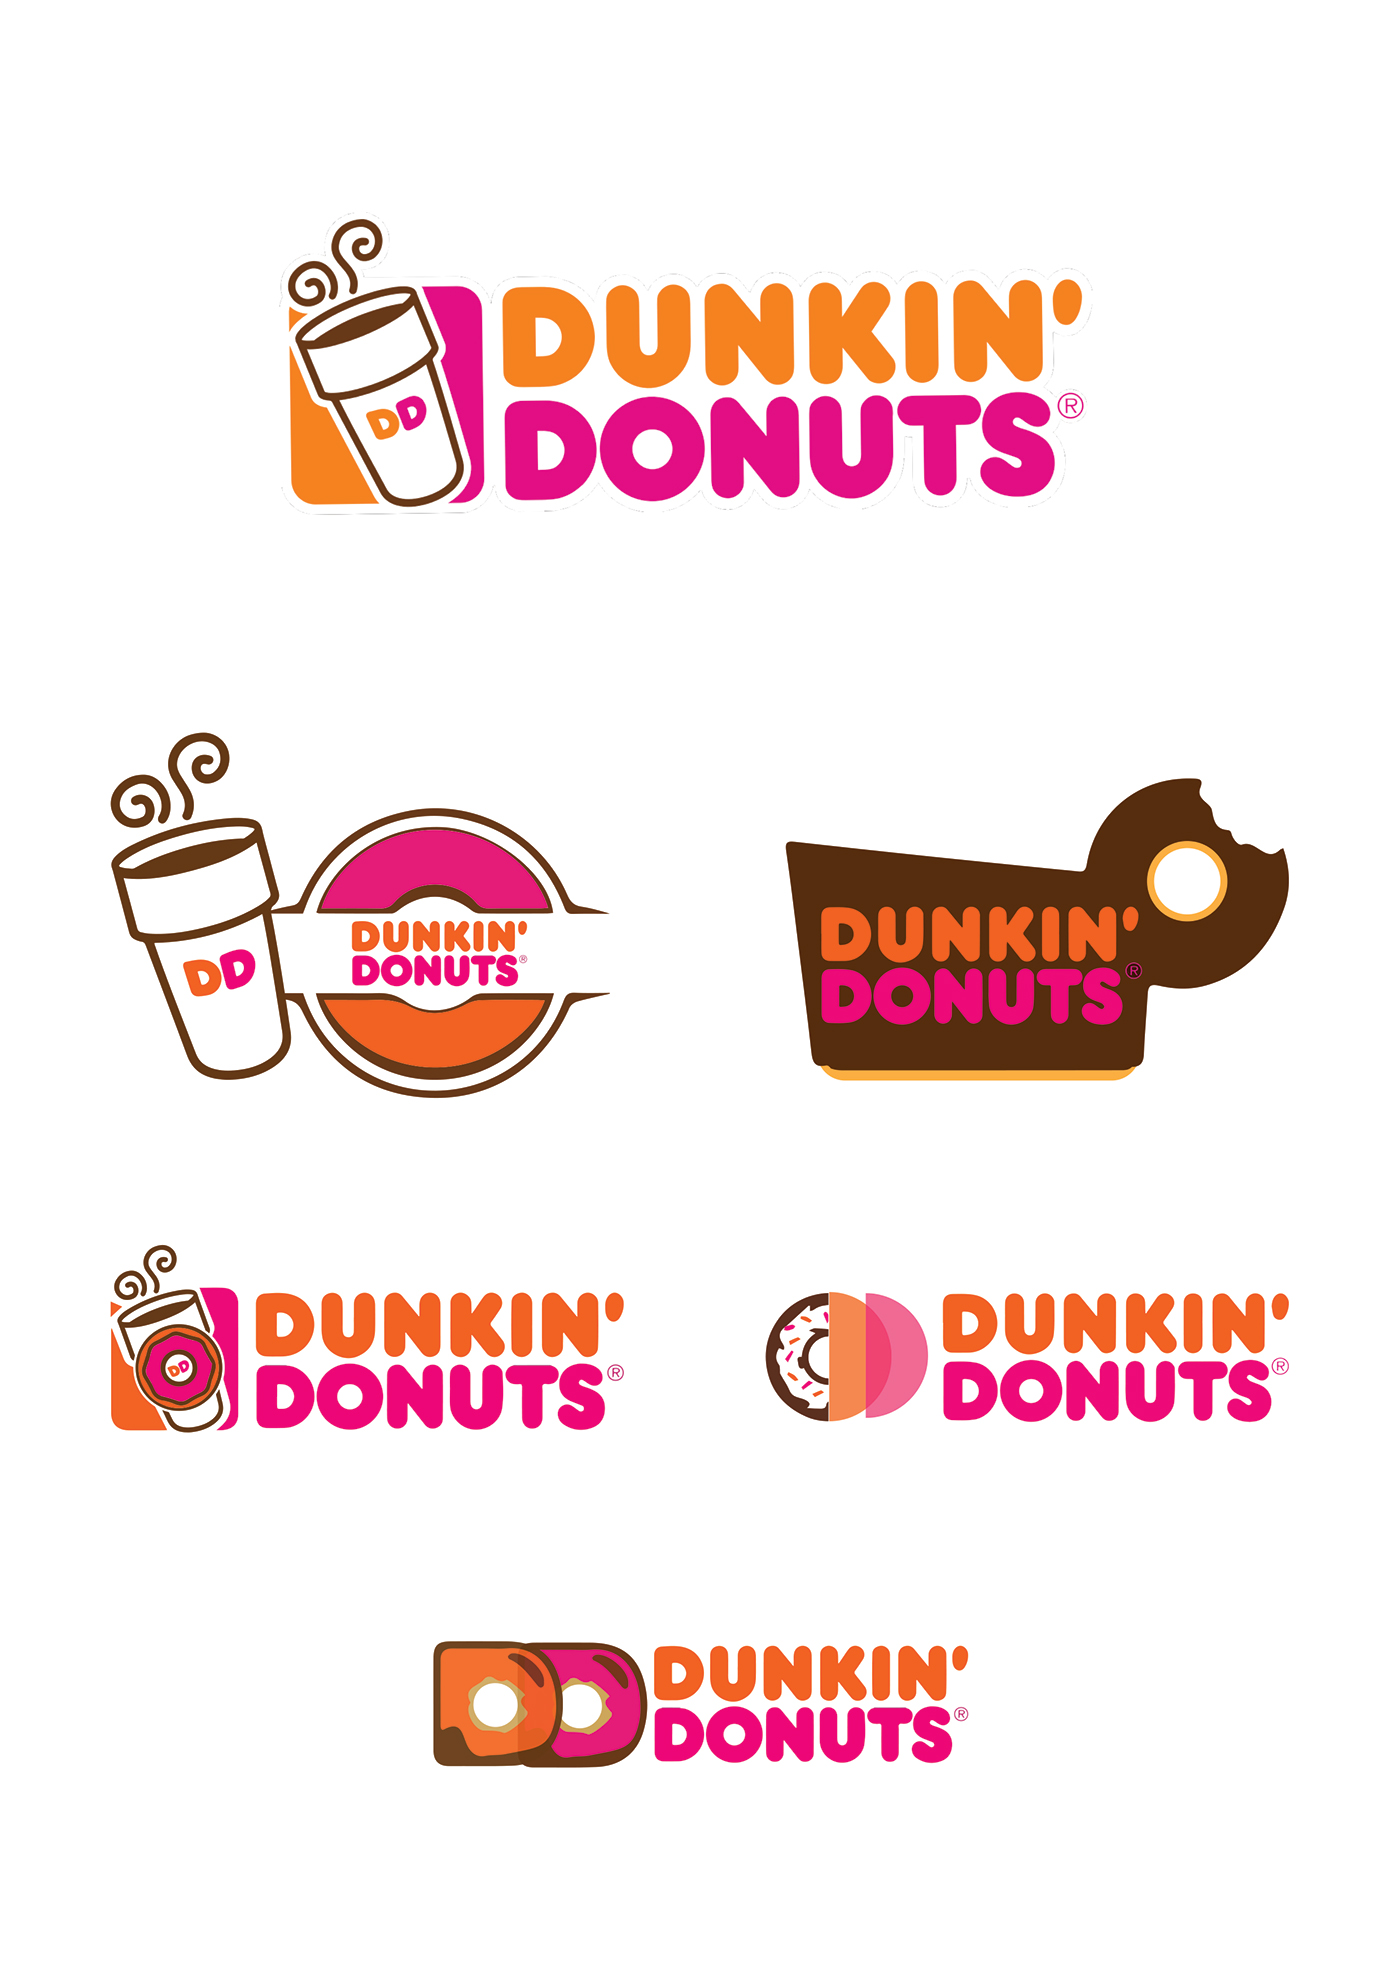 DUNKIN' DONUTS logos.